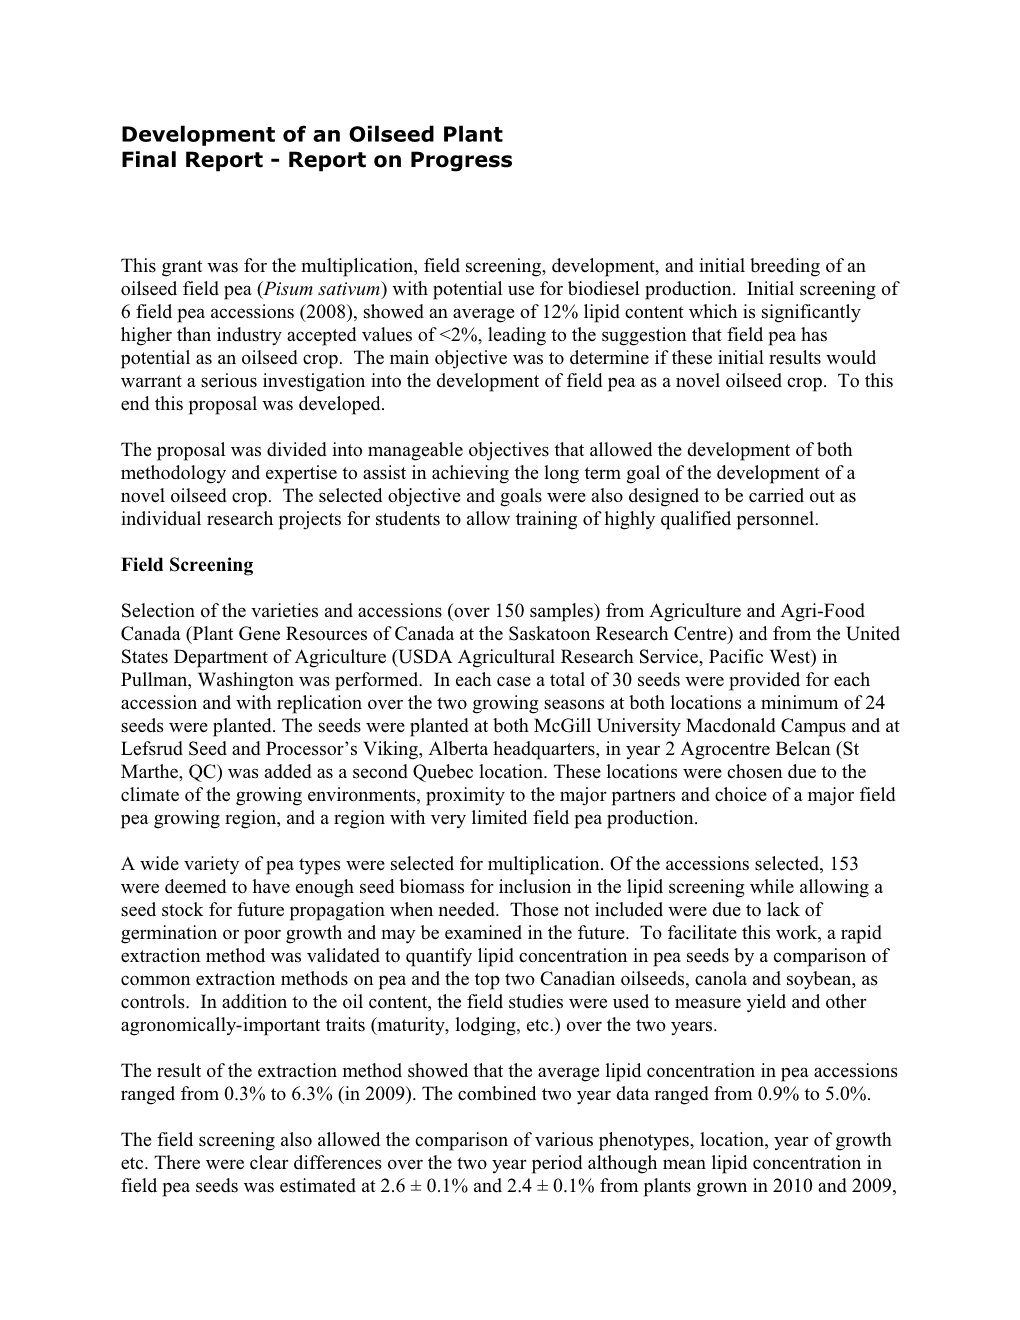 Final Report - Report on Progress